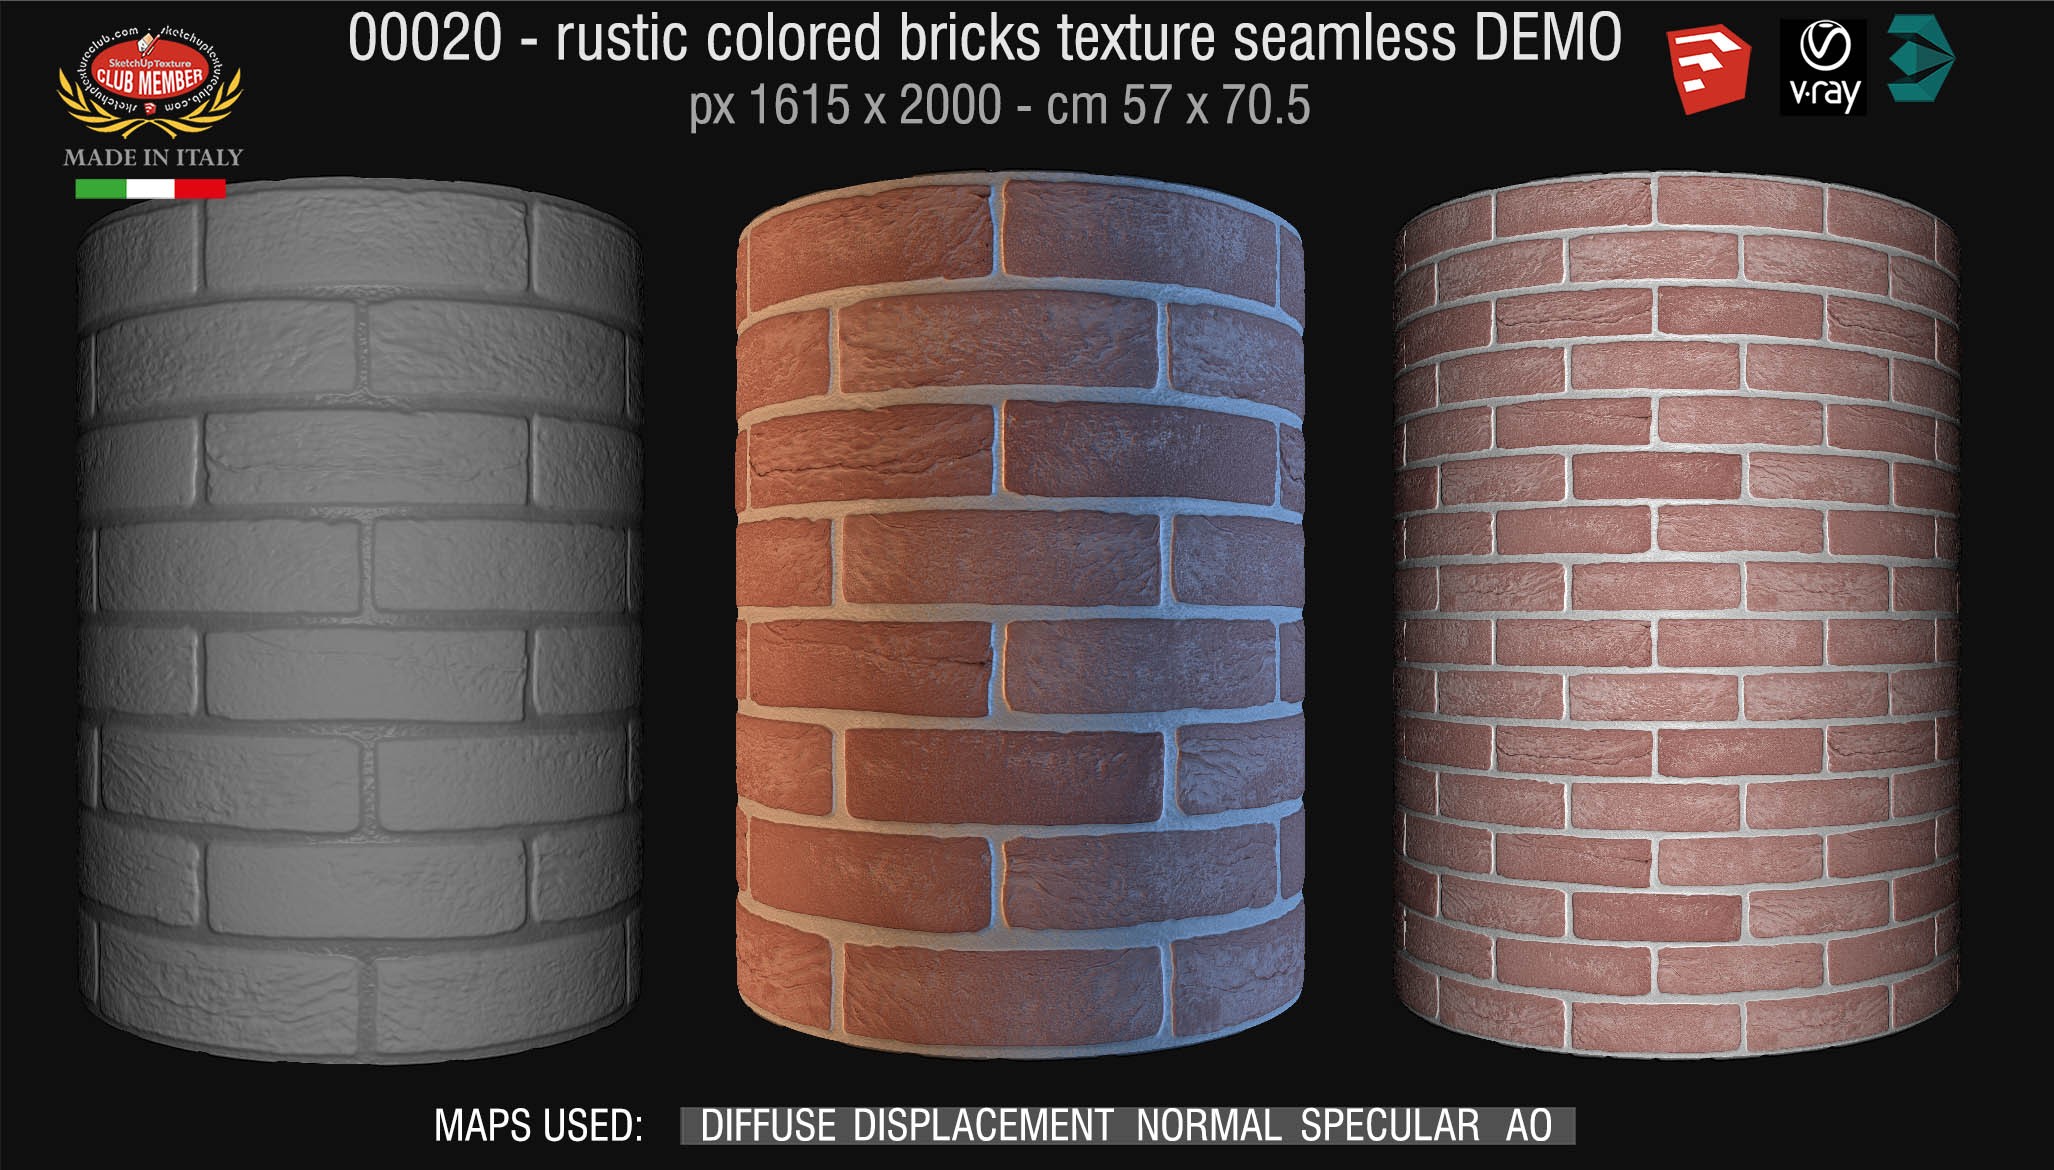 00020 rustic colored bricks texture seamless + maps DEMO